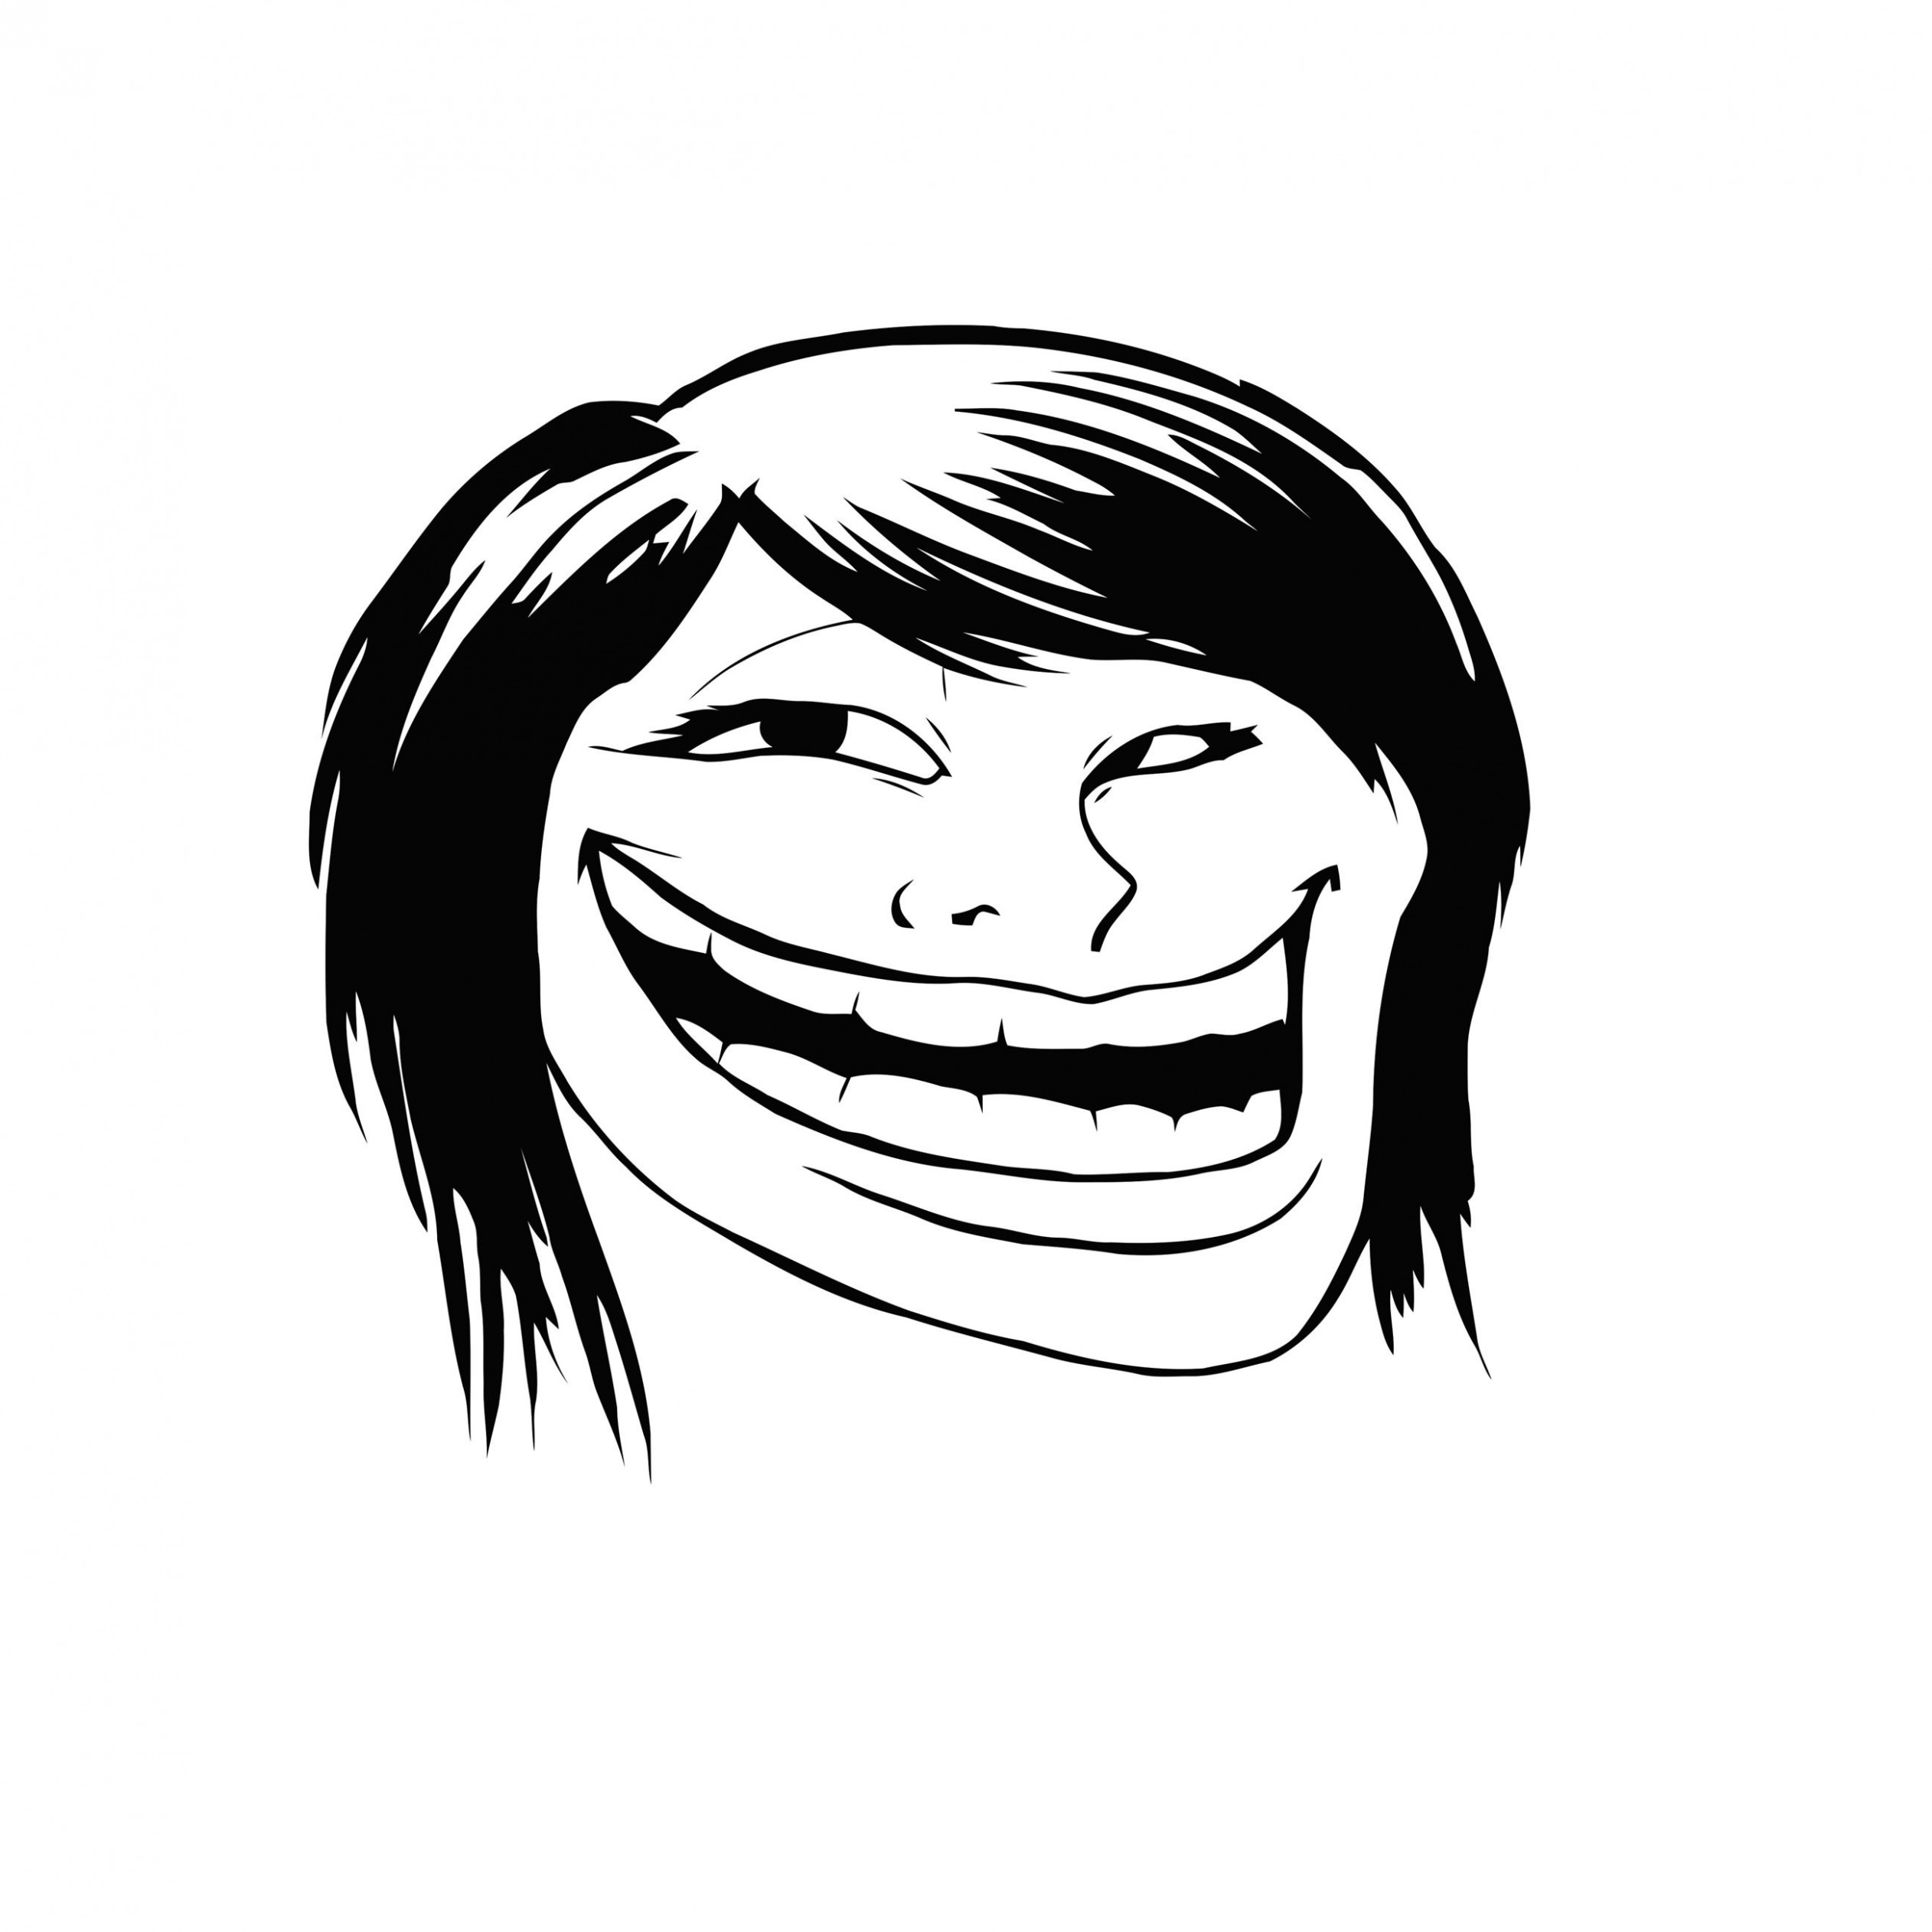 Female Troll Face Meme Wallpaper for Apple iPad mini 2